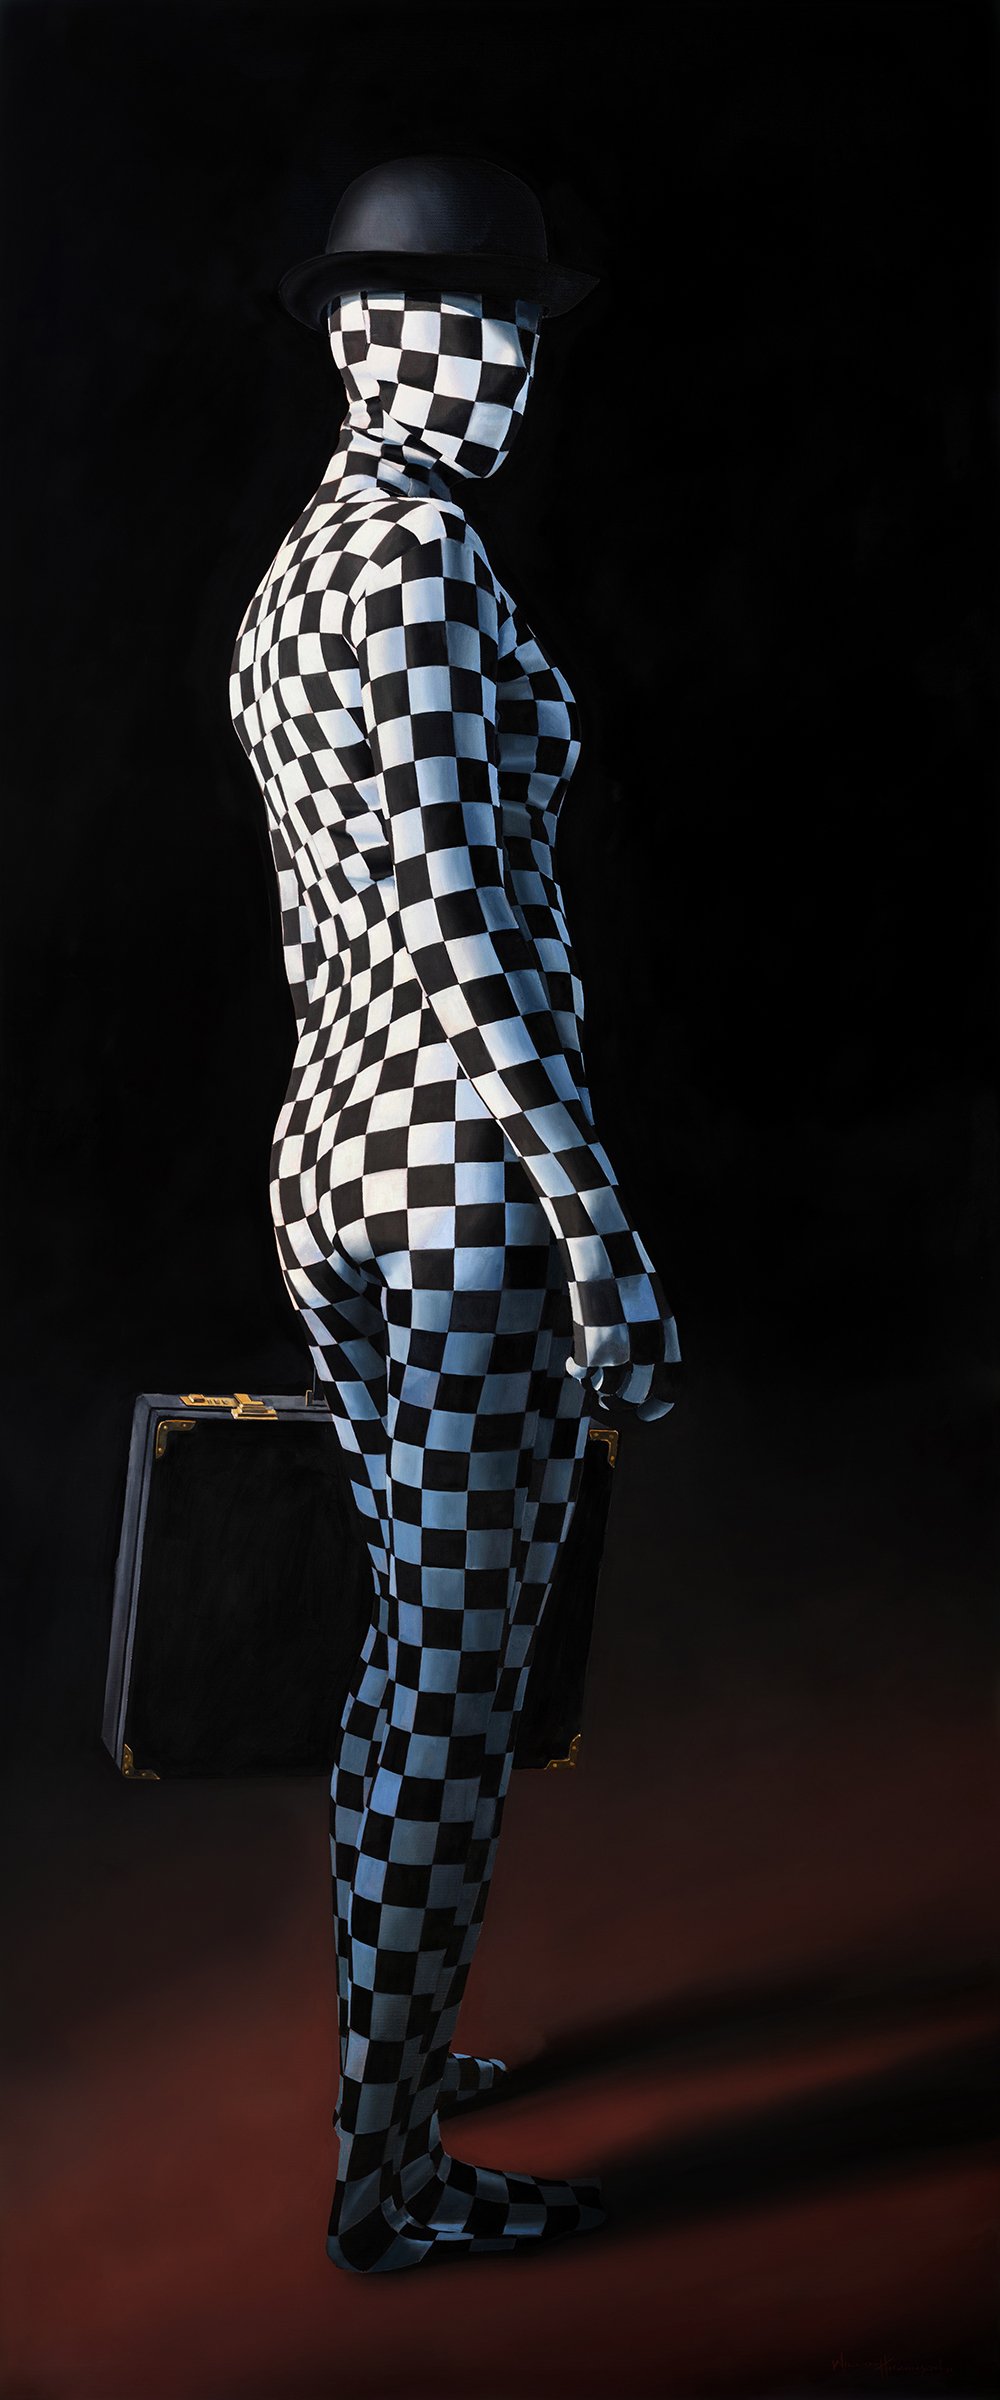 william higginson surrealism oil painting checker girl.jpg